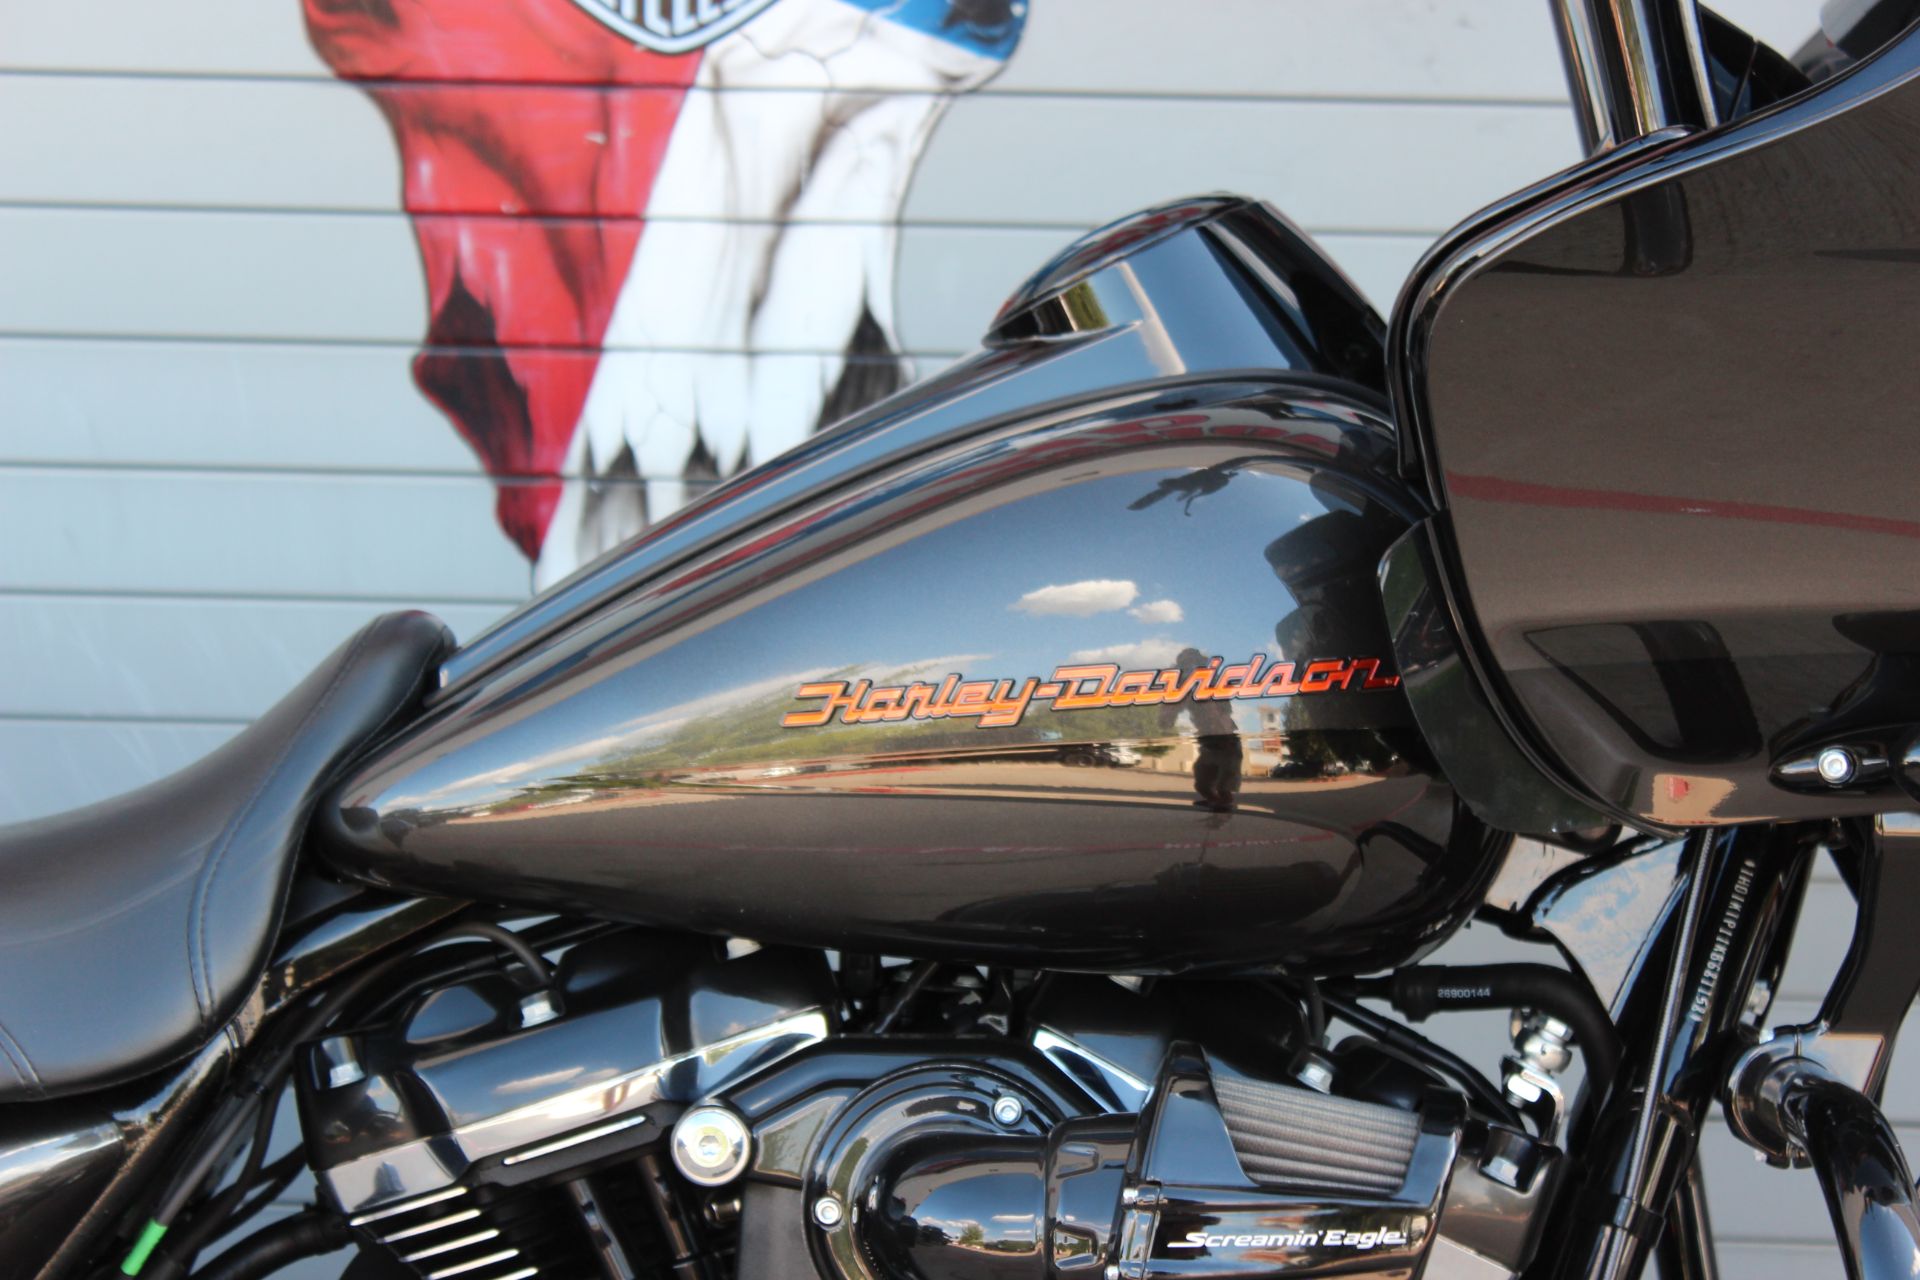 2019 Harley-Davidson Road Glide® Special in Grand Prairie, Texas - Photo 6